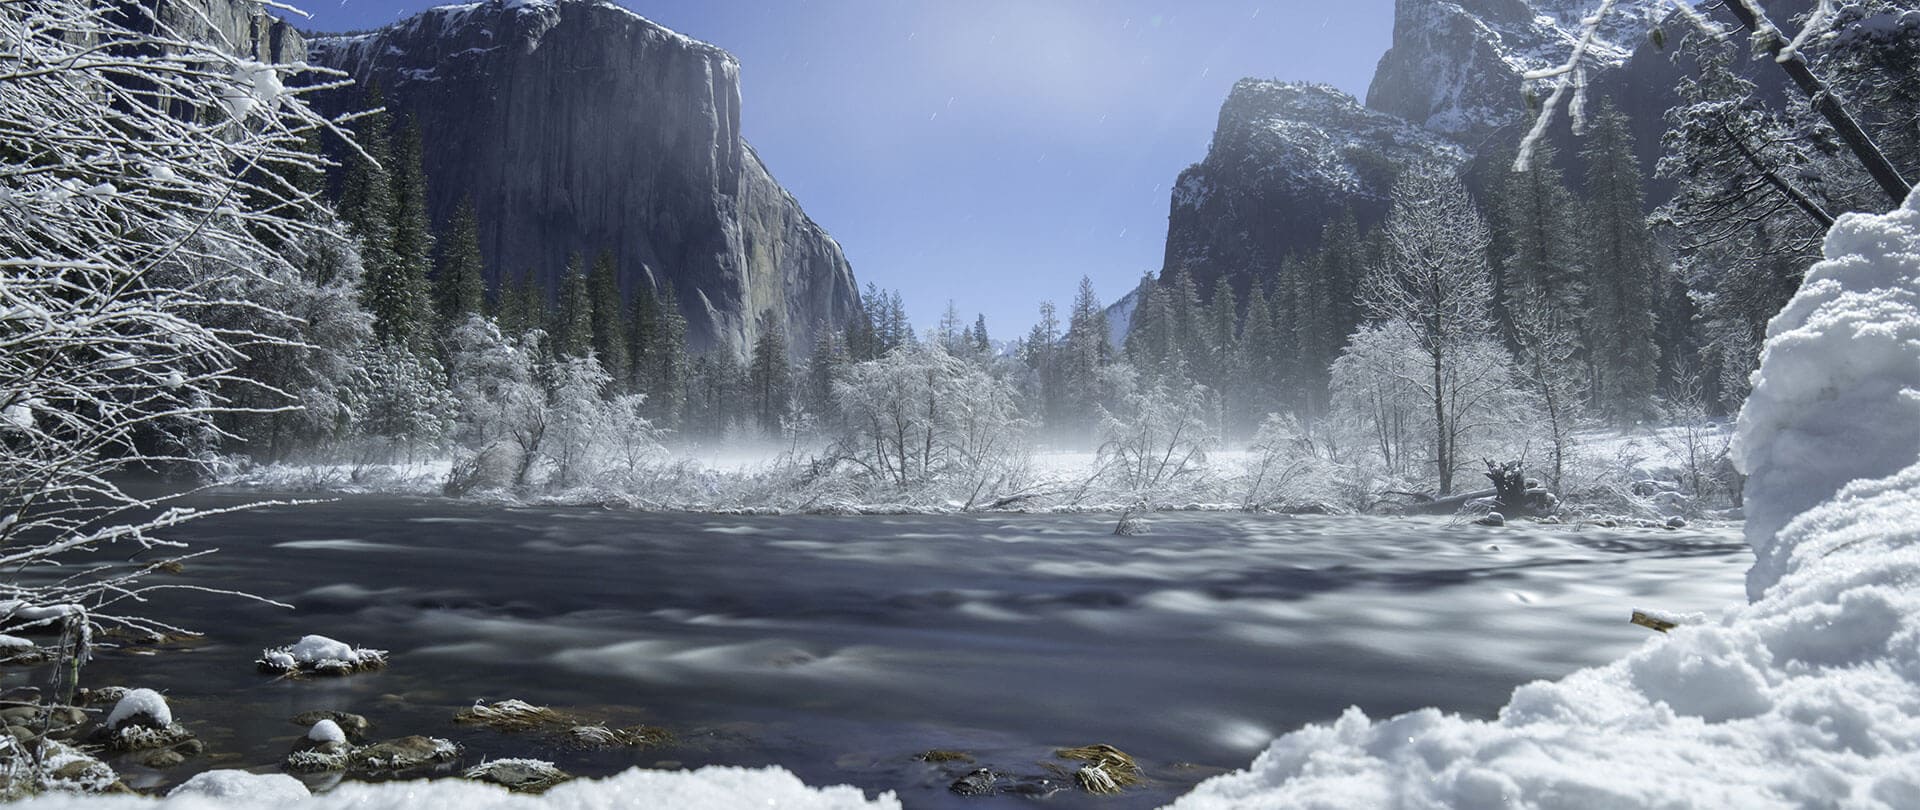 A winter in Yosemite under the stars